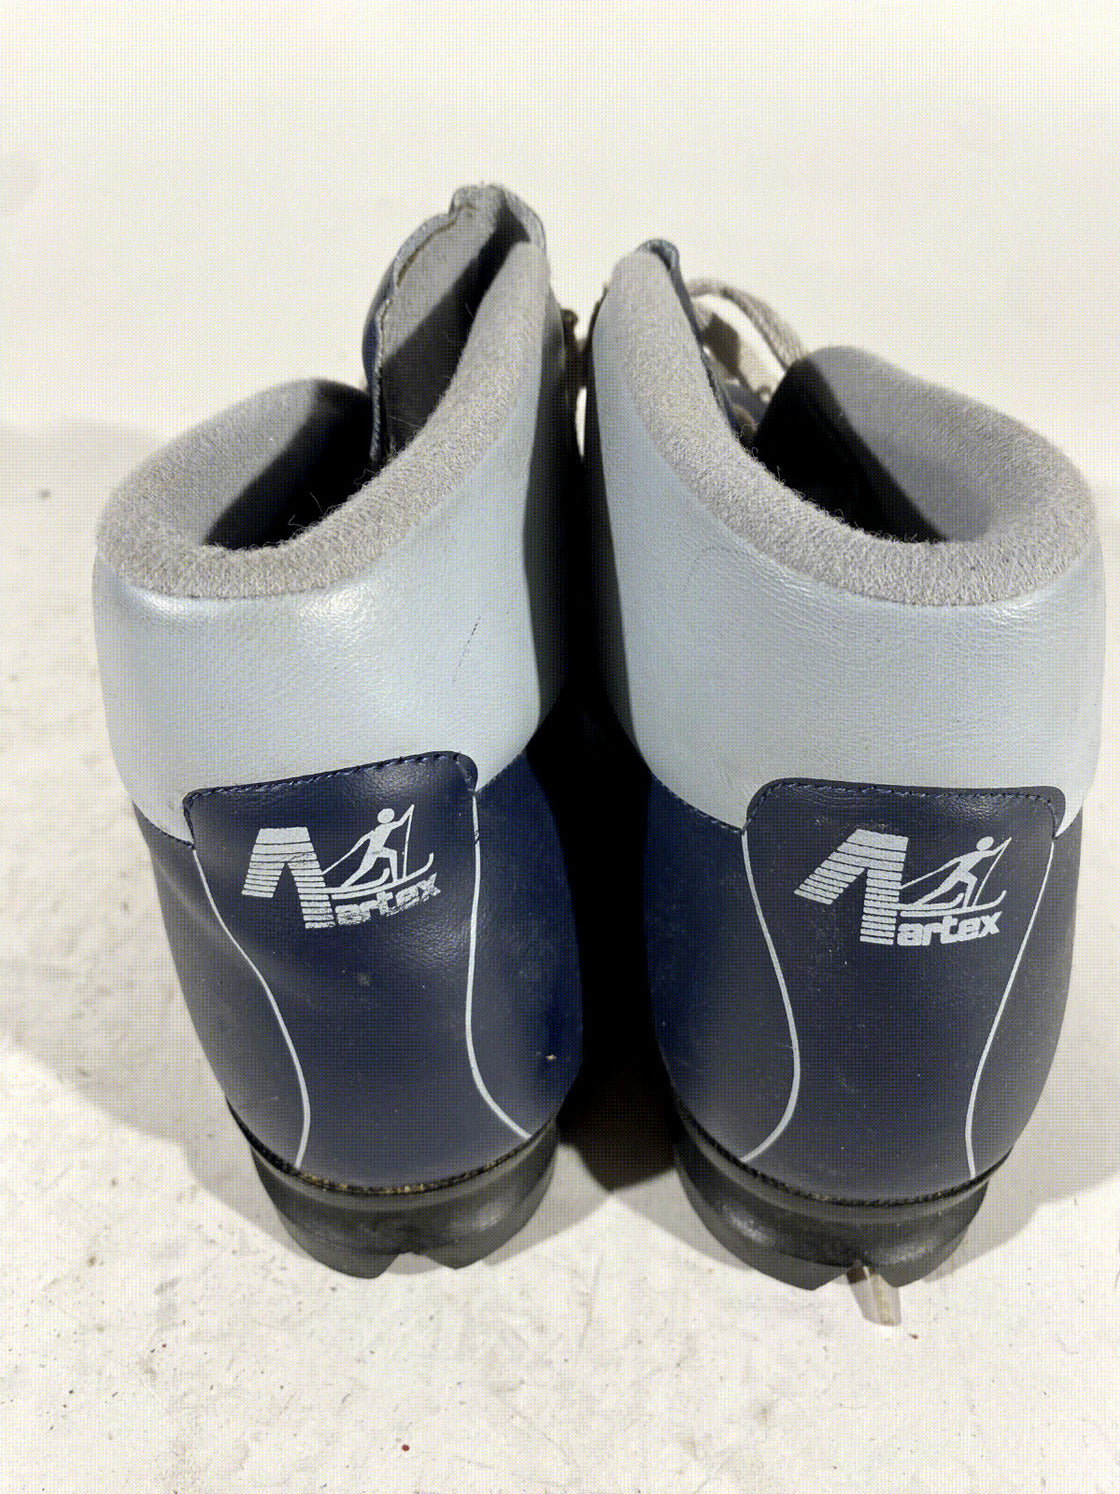 Artex Vintage Nordic Norm Cross Country Ski Boots Size EU44 US10.5 NN 75mm